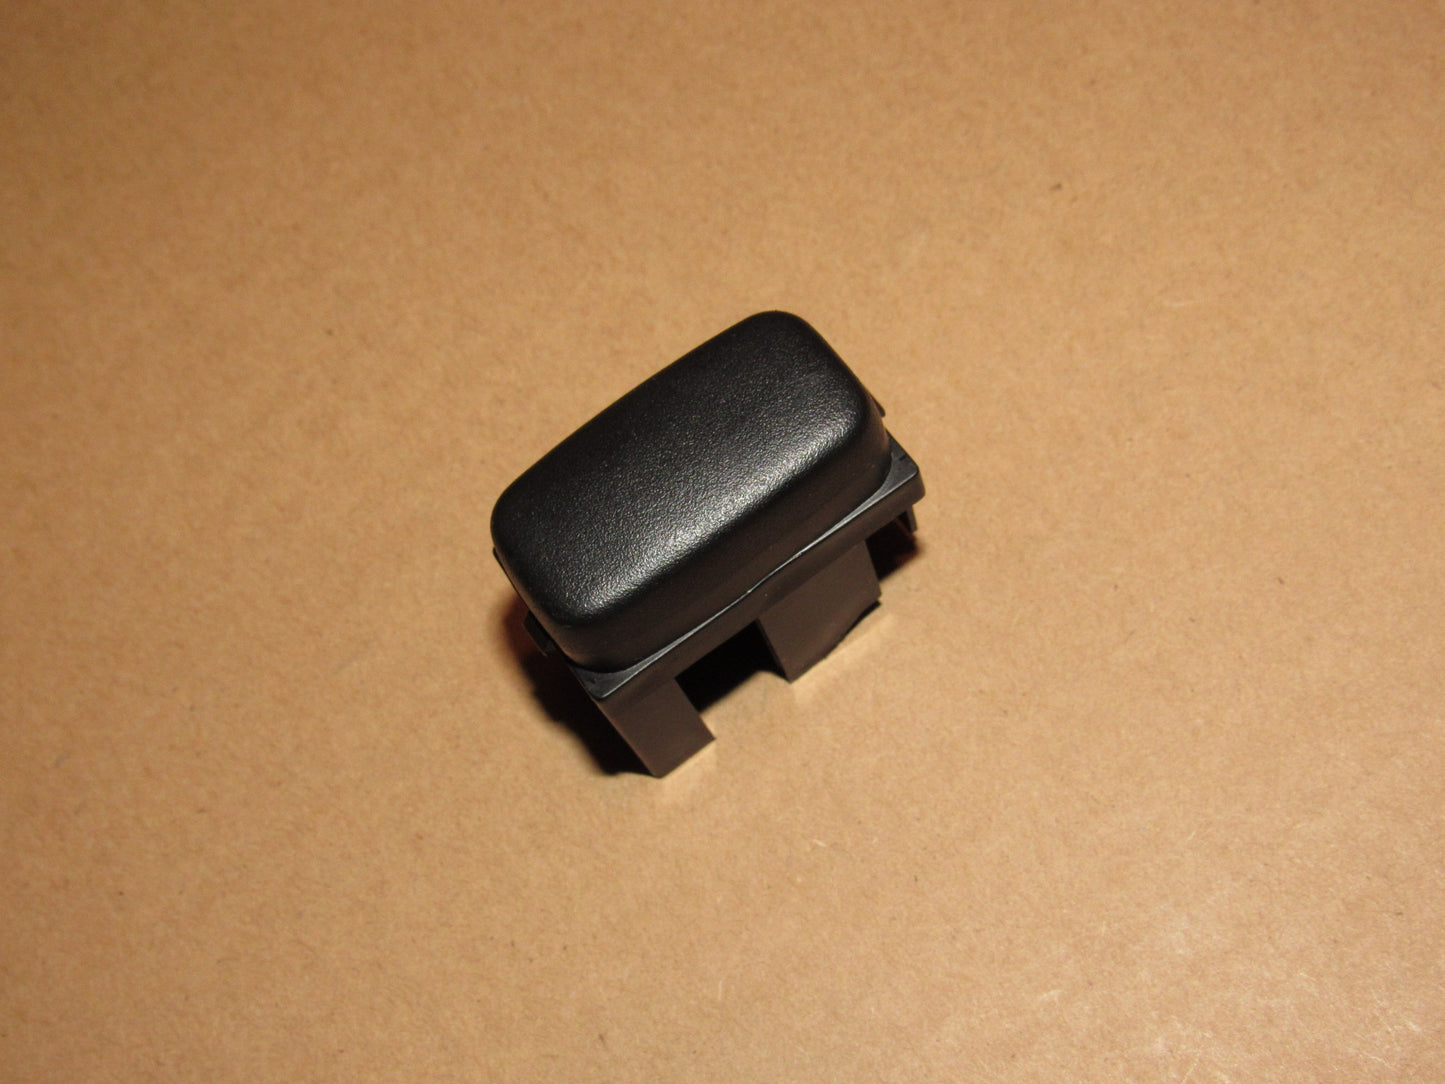 06-12 Mitsubishi Eclipse OEM Fog Light ASC Switch Delete Trim Cap Cover